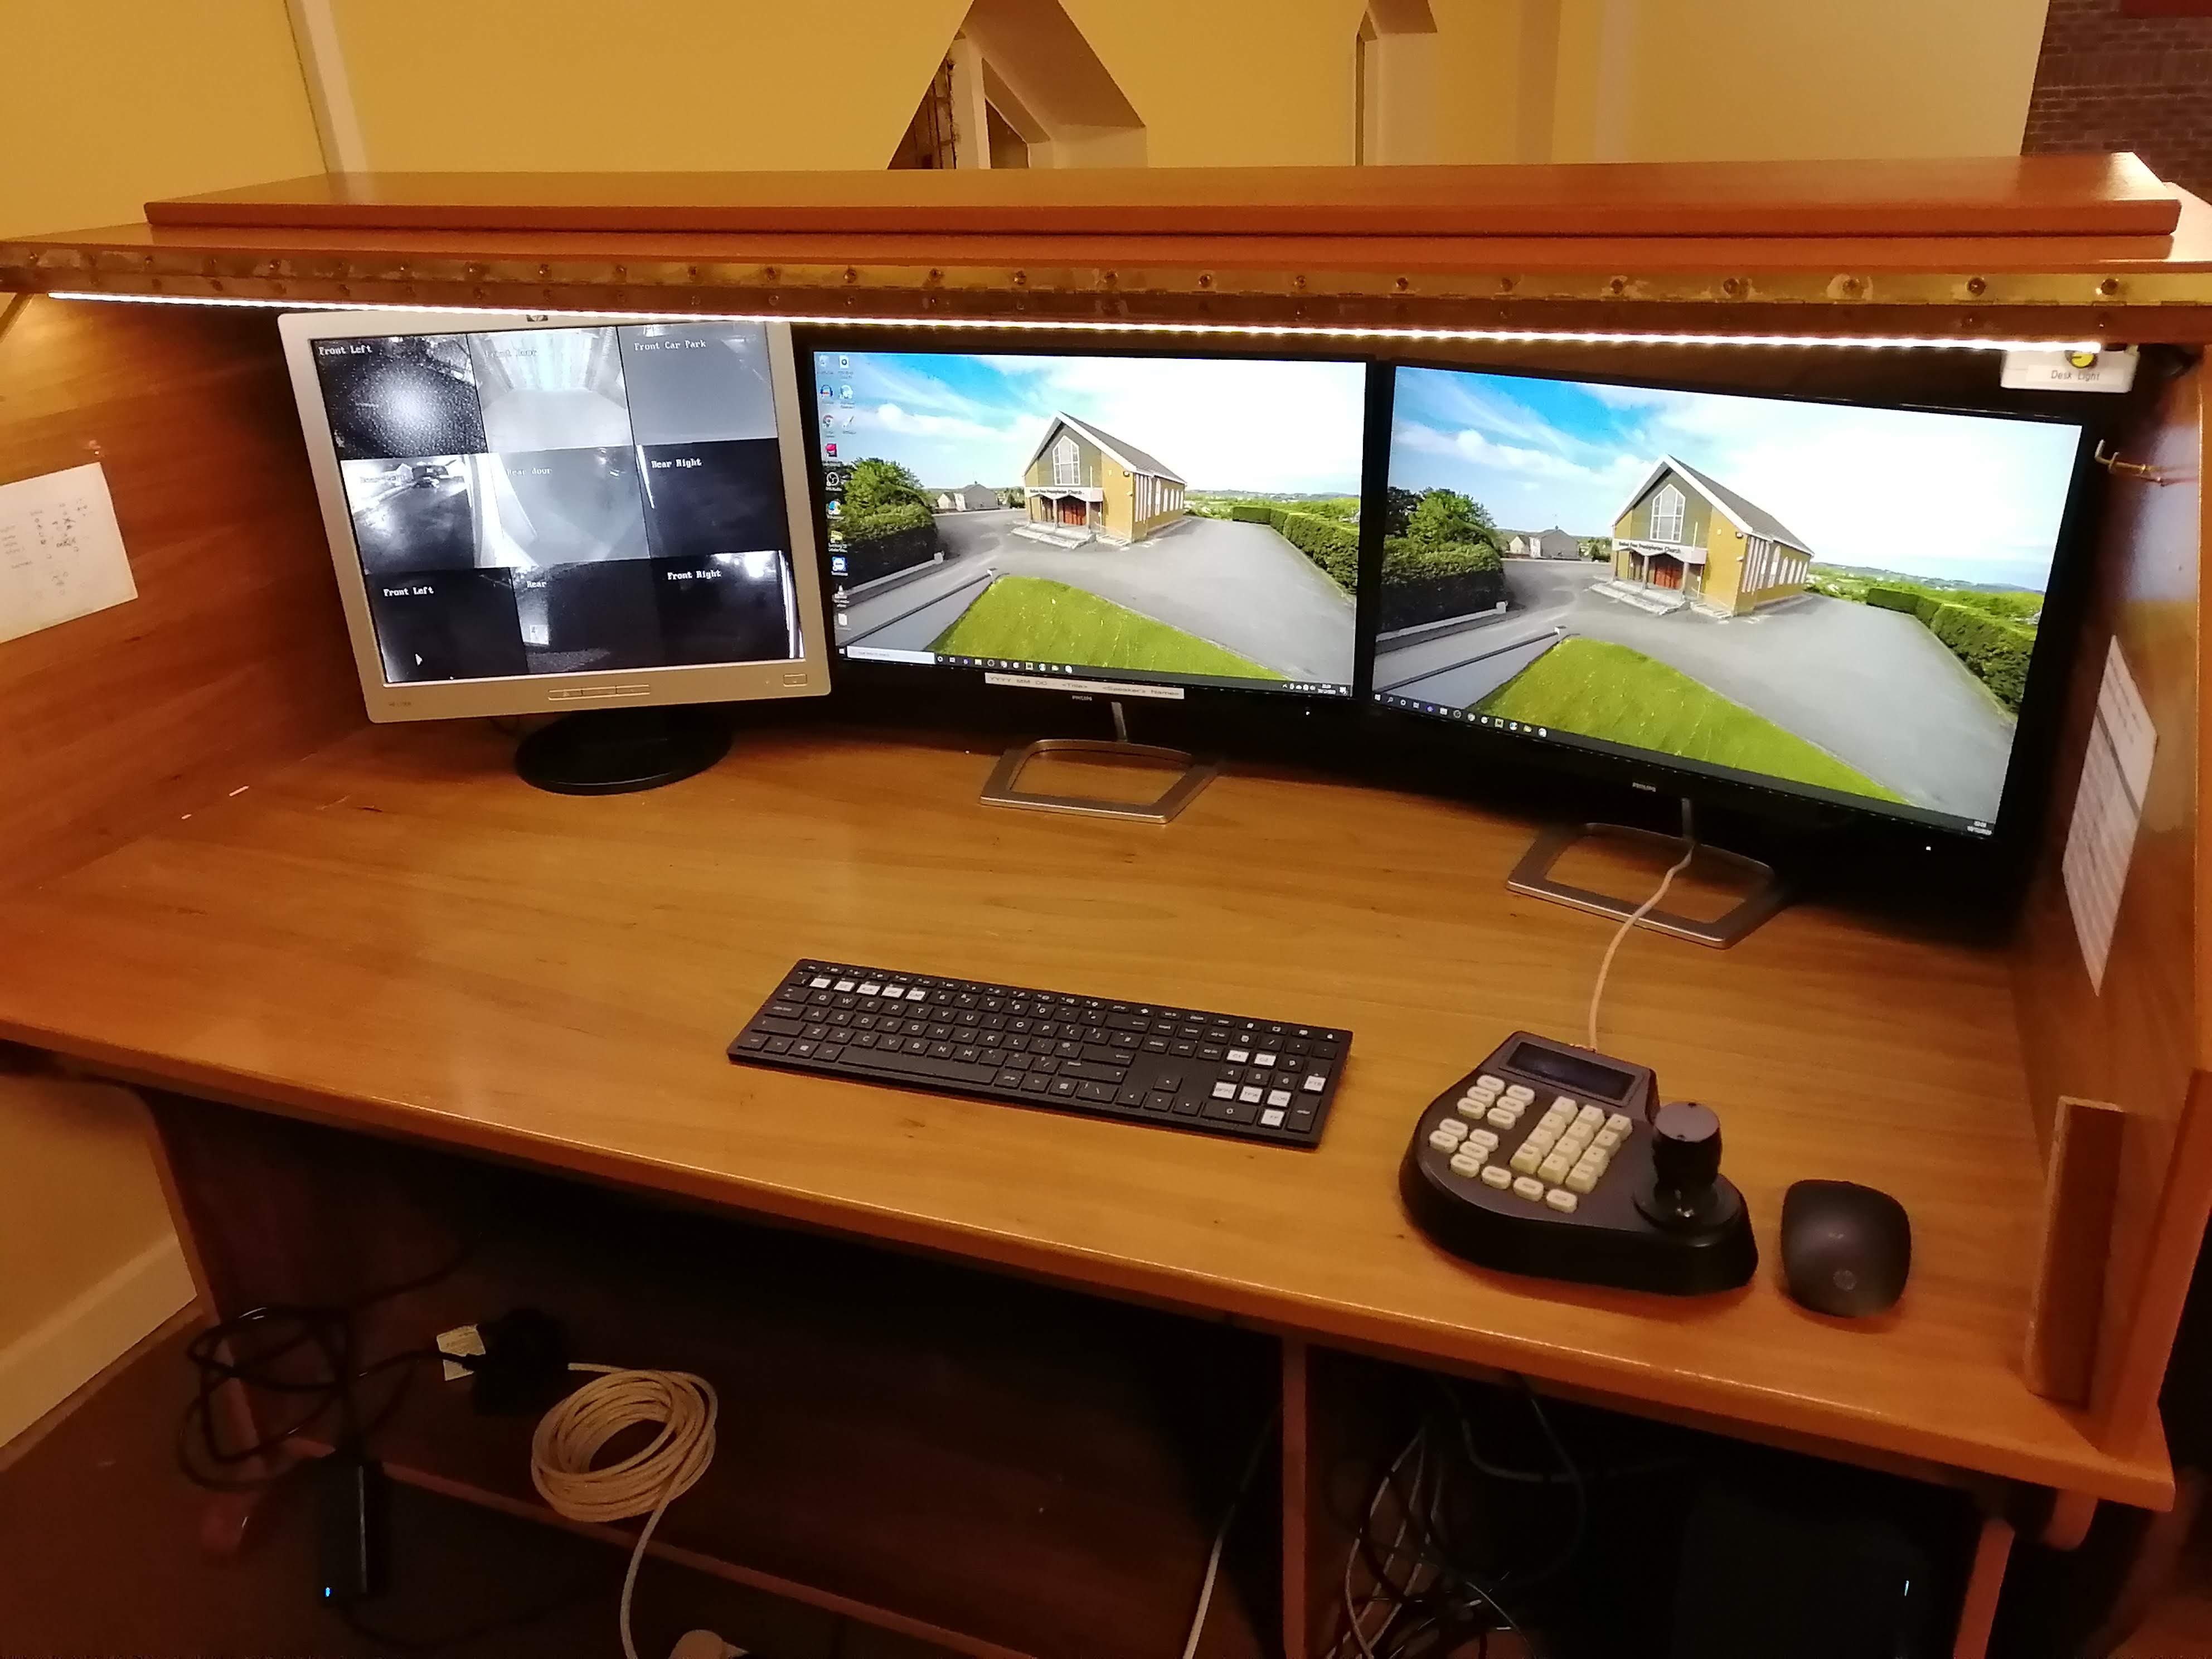 Tidy desk with three monitors, keyboard, joystick etc